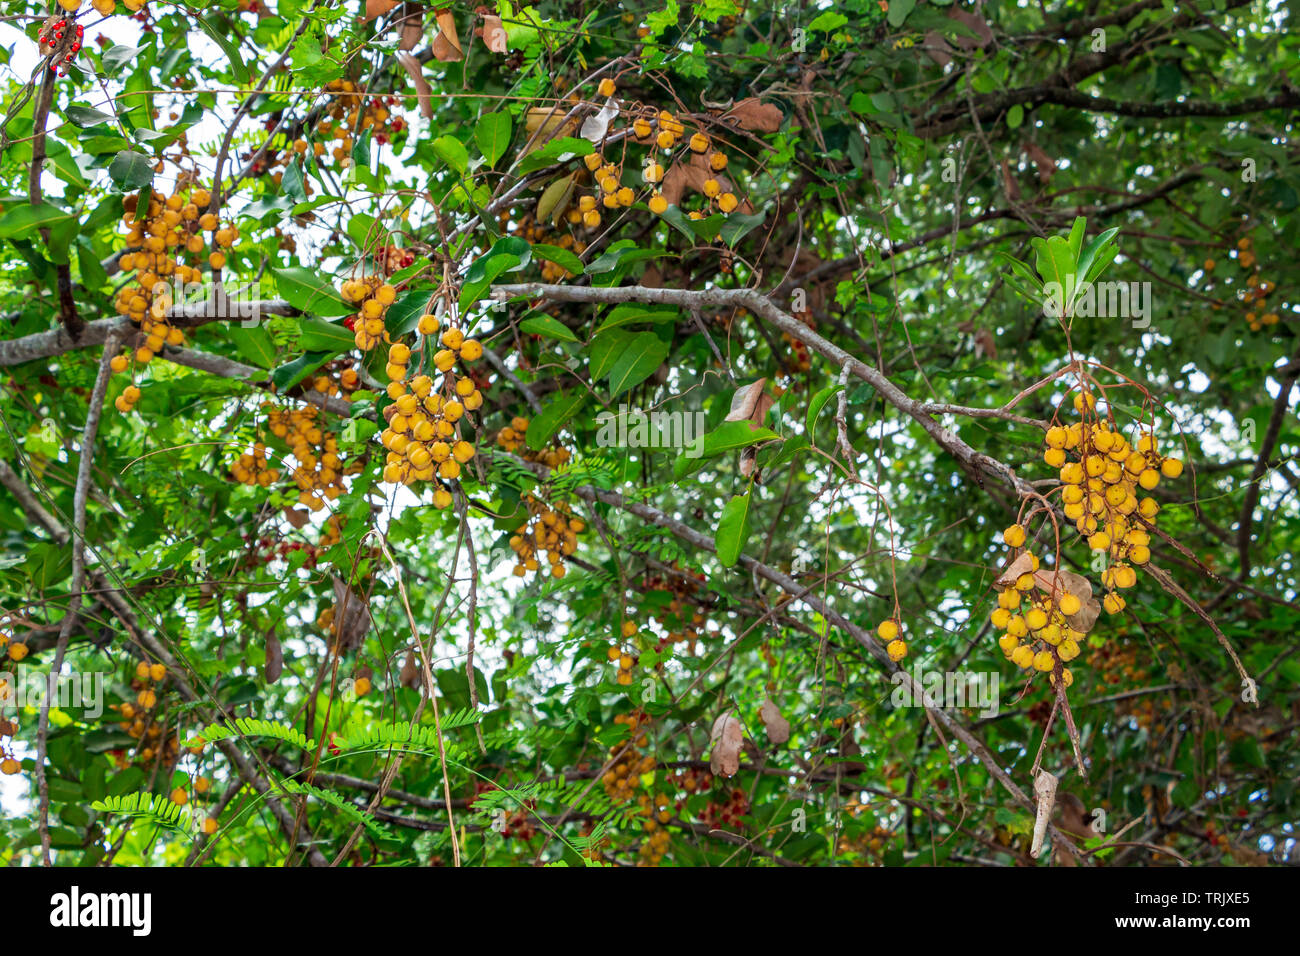 Carrotwood a.k.a. tuckeroo (Cupaniopsis anacardioides) - Pine Island Ridge Natural Area, Davie, Florida, USA Stock Photo